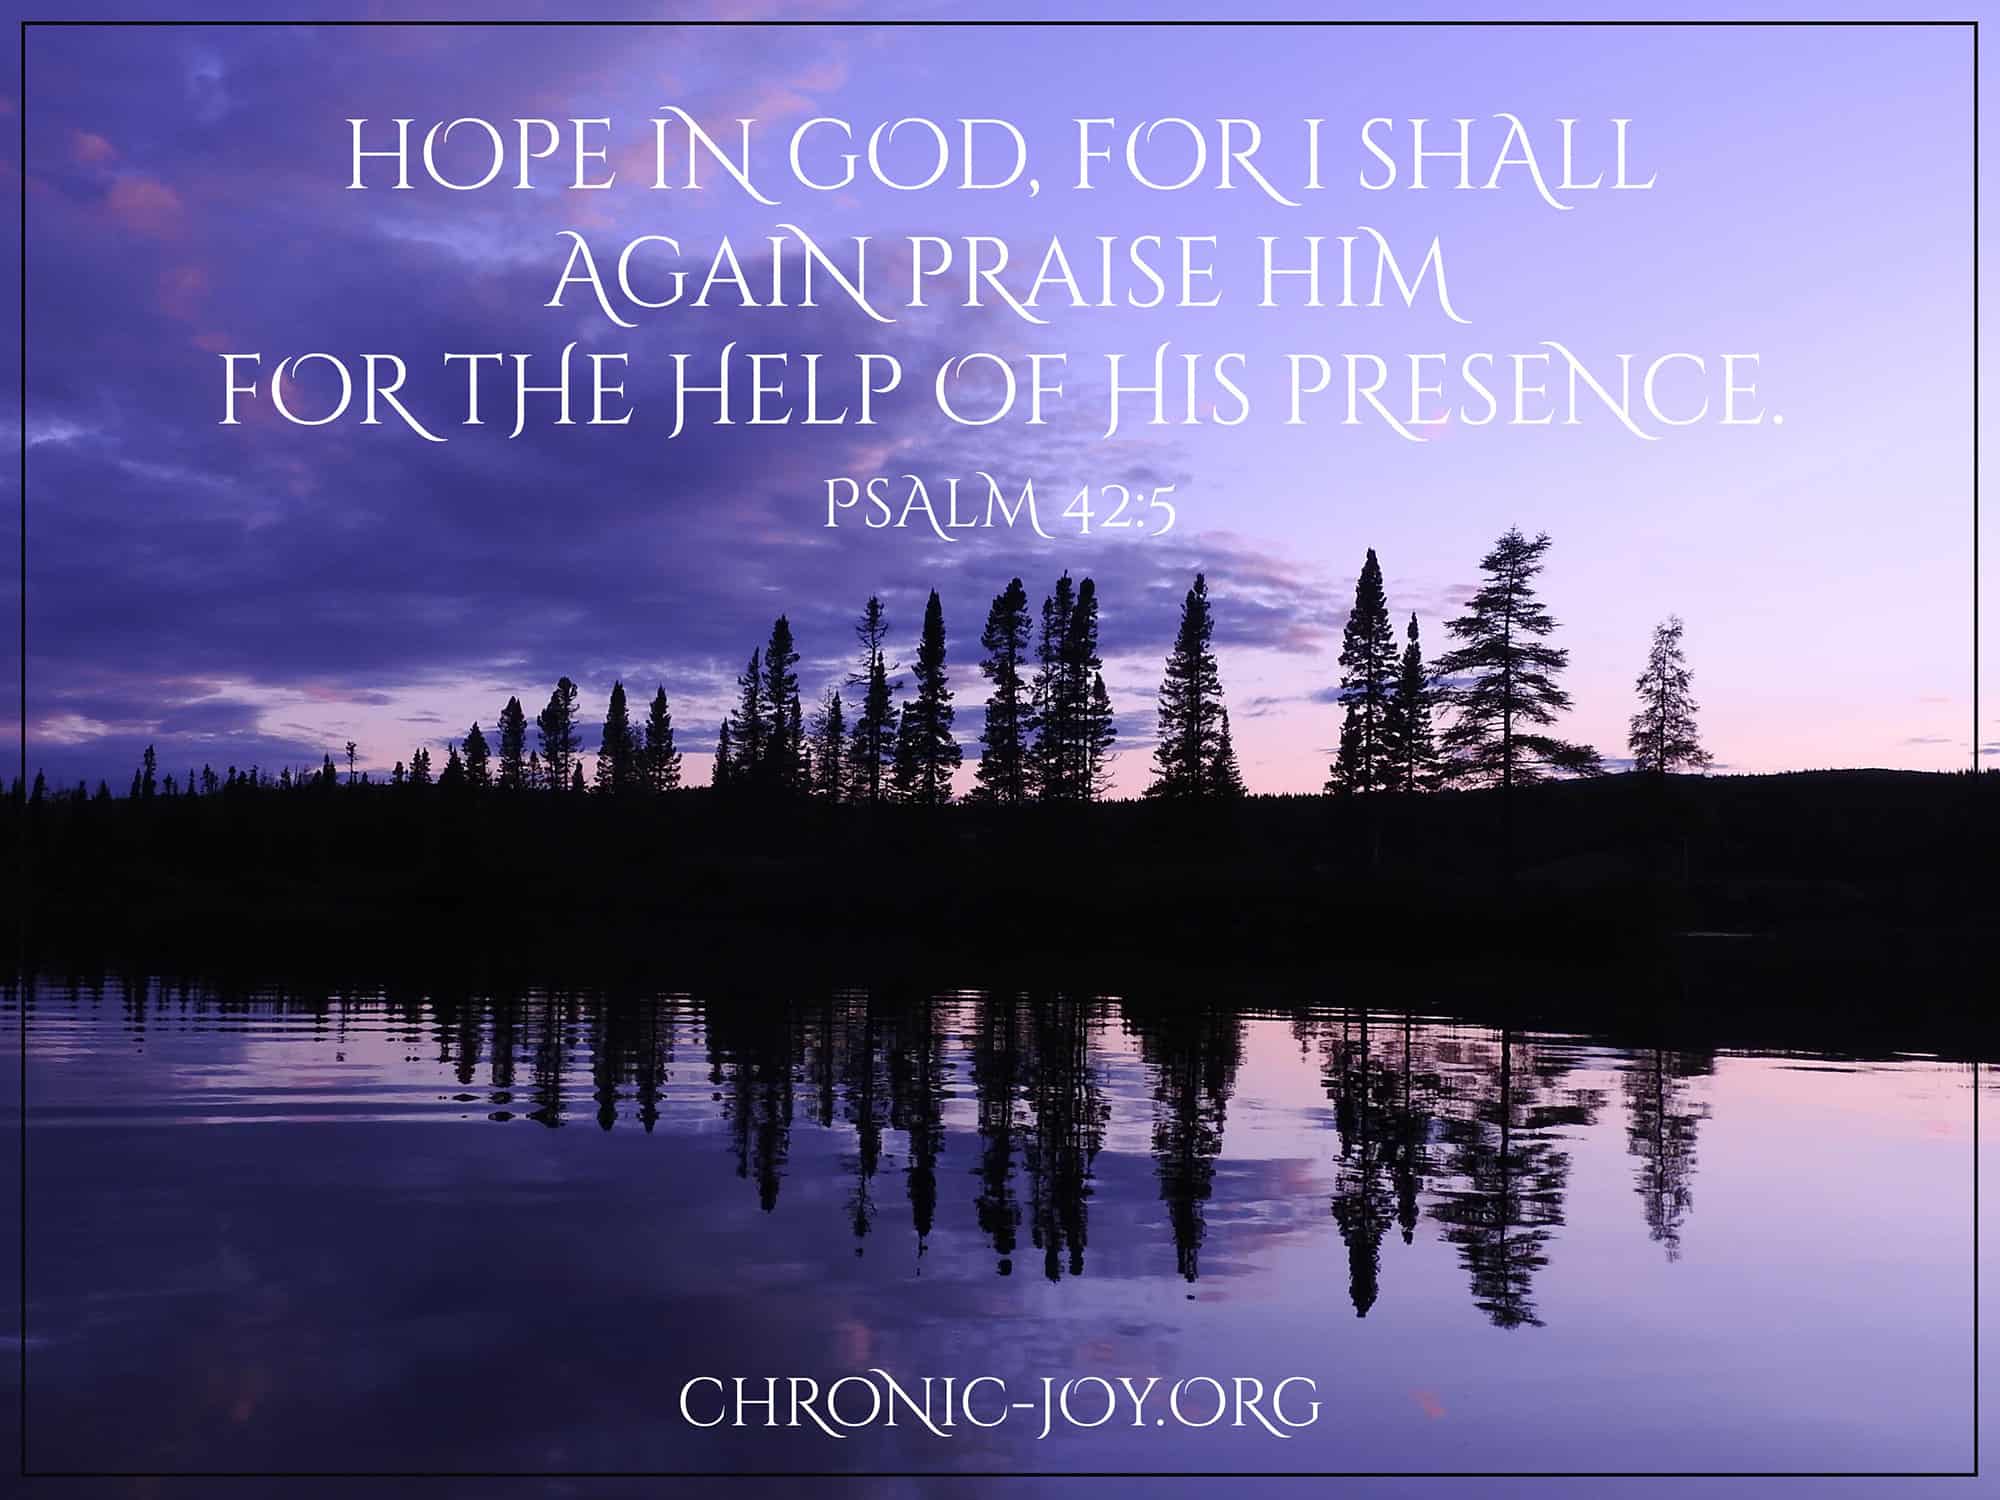 Hope in God, for I shall again praise Him.